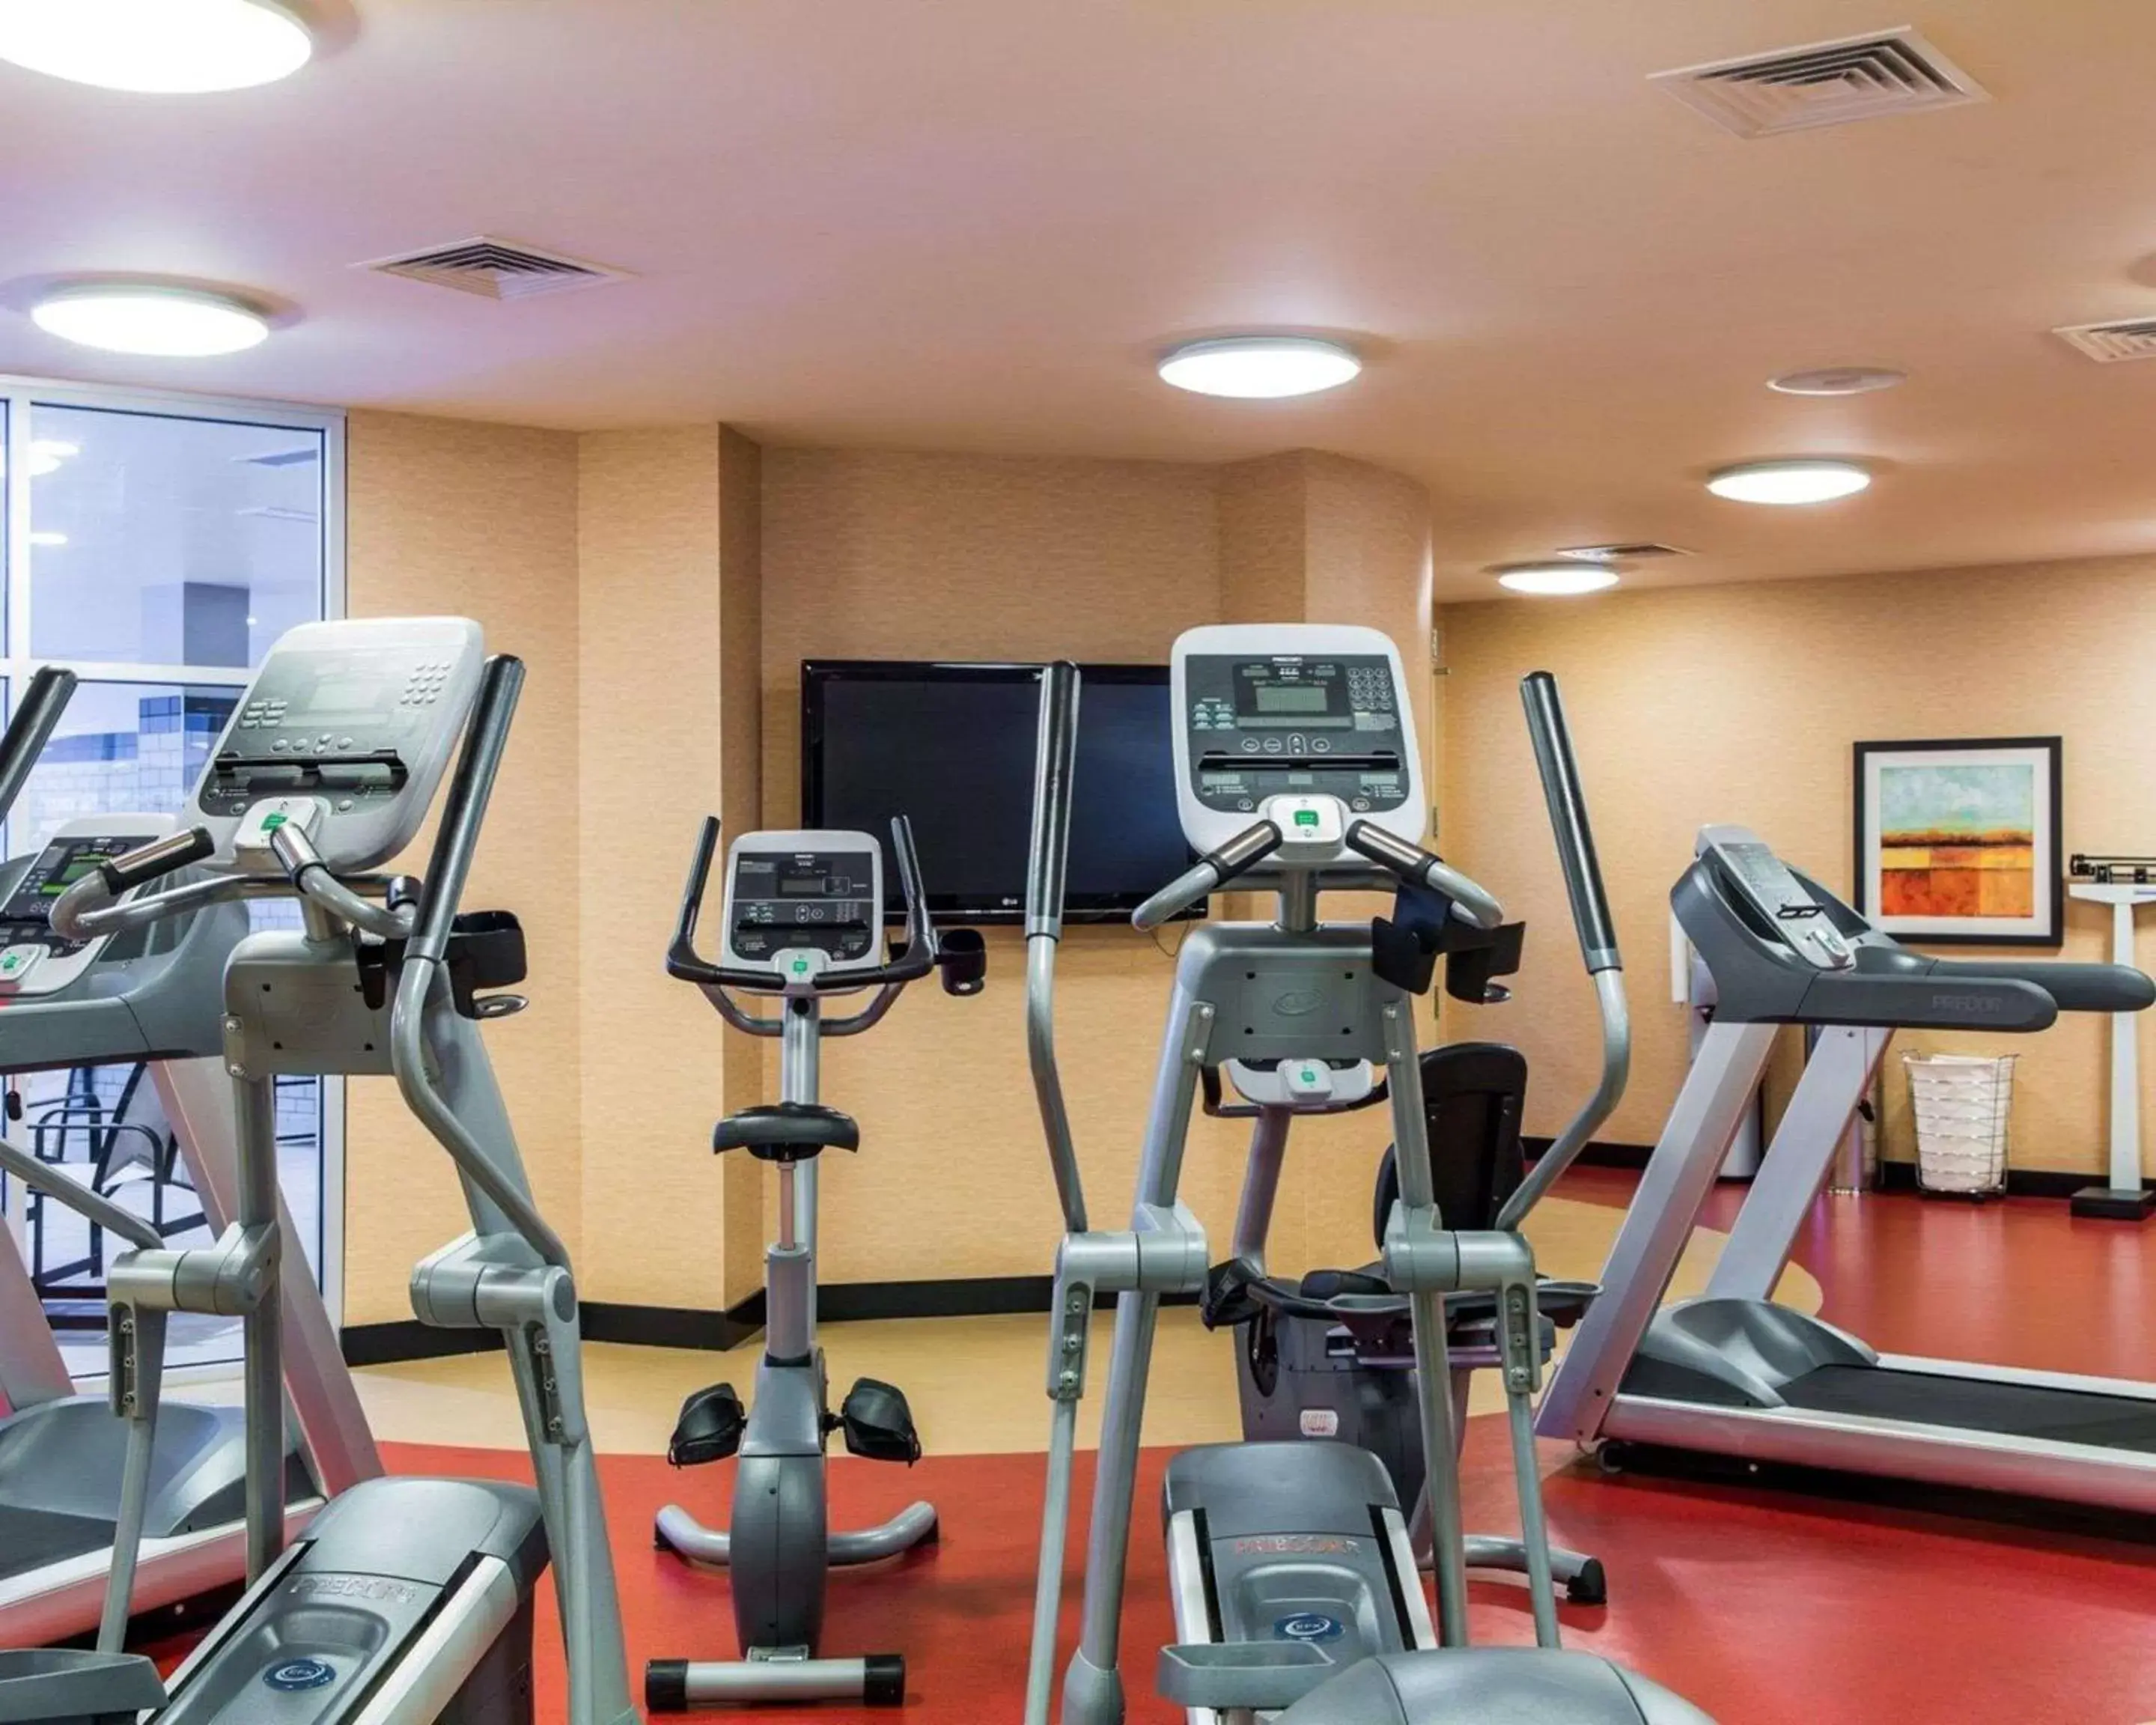 Fitness centre/facilities, Fitness Center/Facilities in Cambria Hotel Traverse City